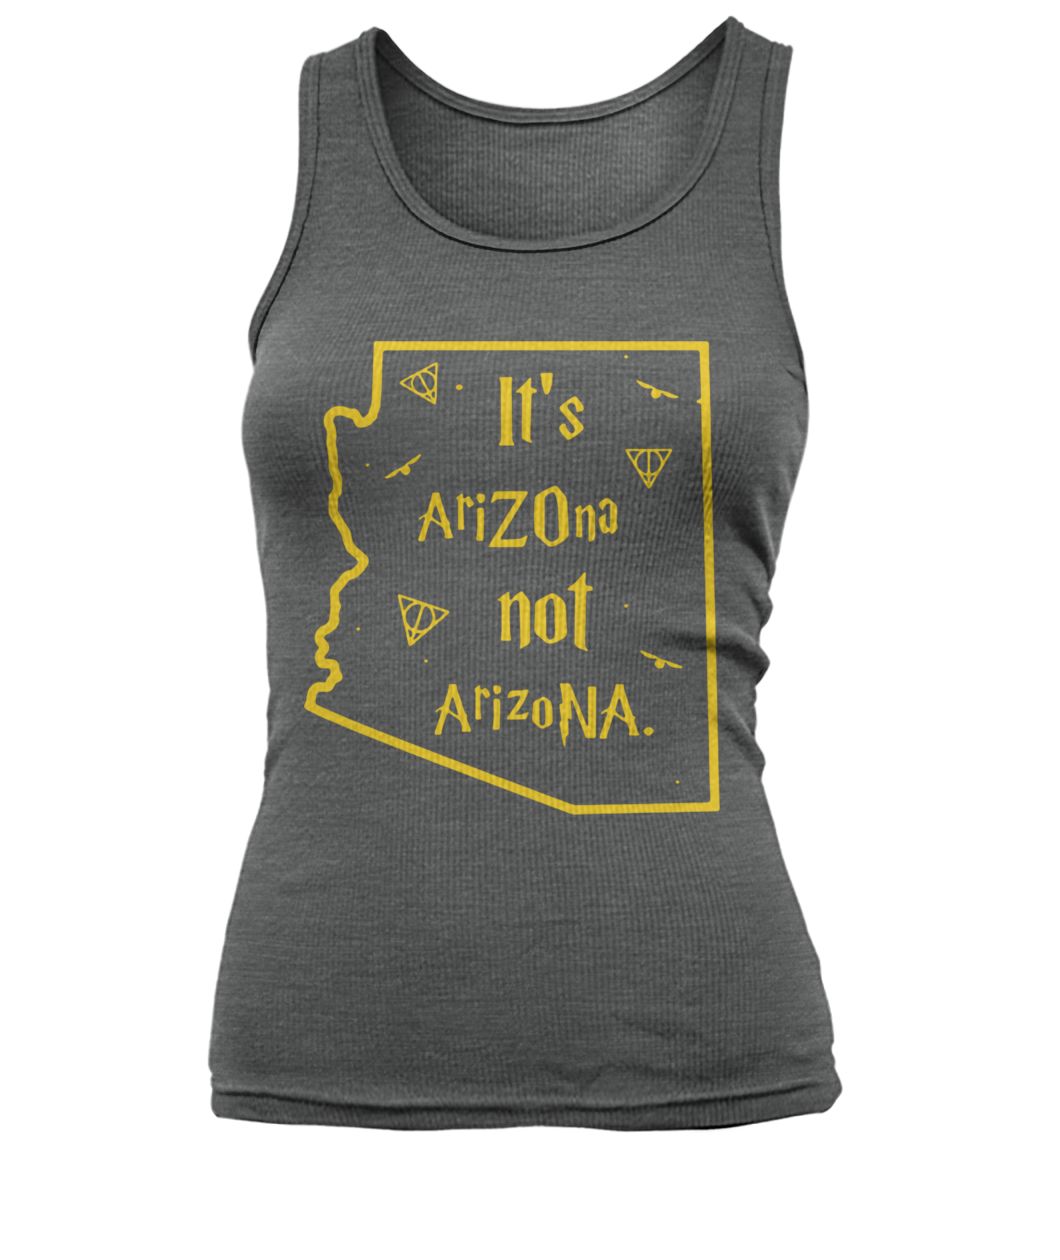 It's arizona not arizona women's tank top